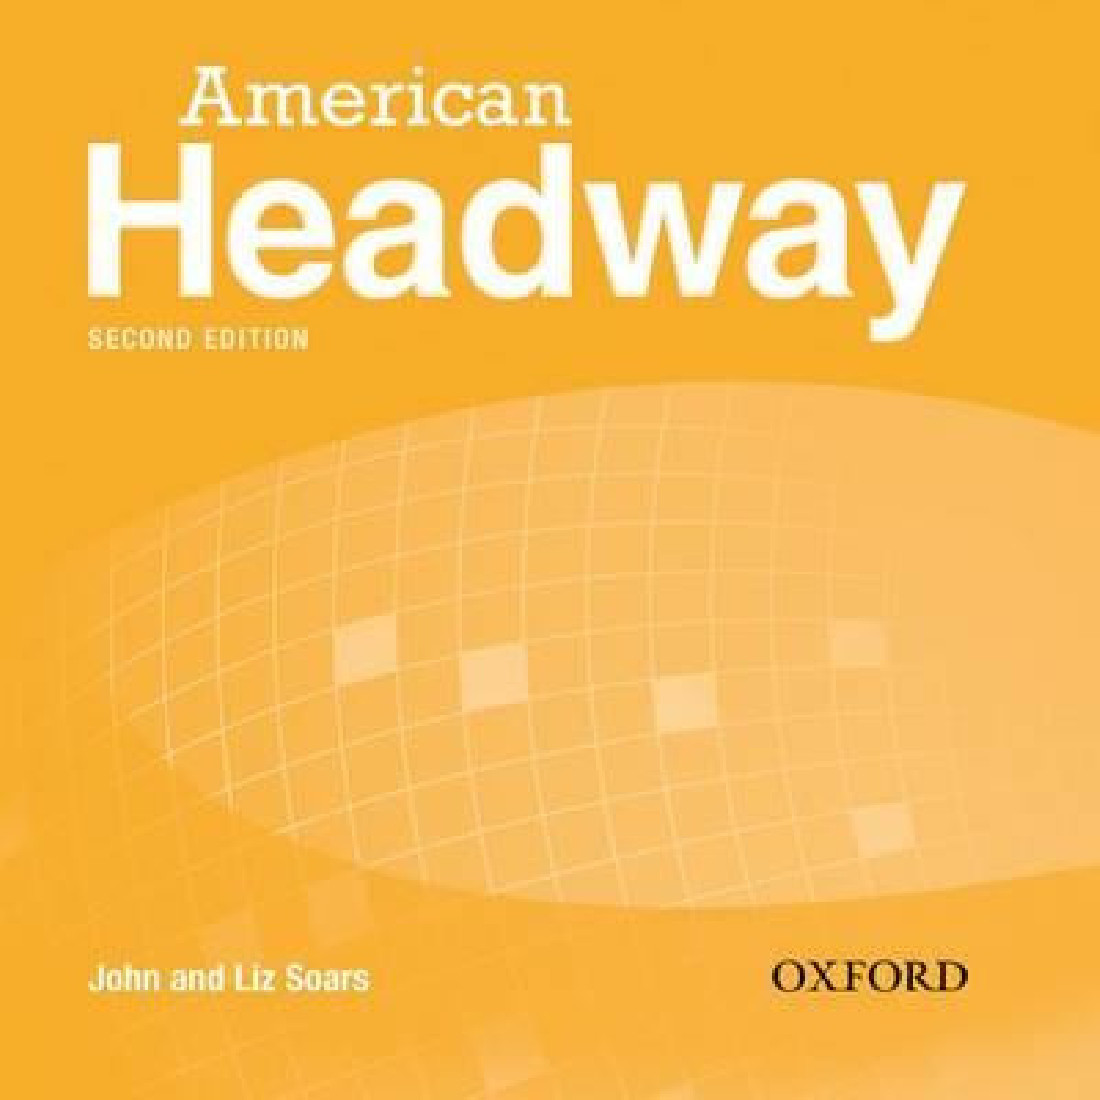 AMERICAN HEADWAY 2 AUDIO CD (3) 2ND ED